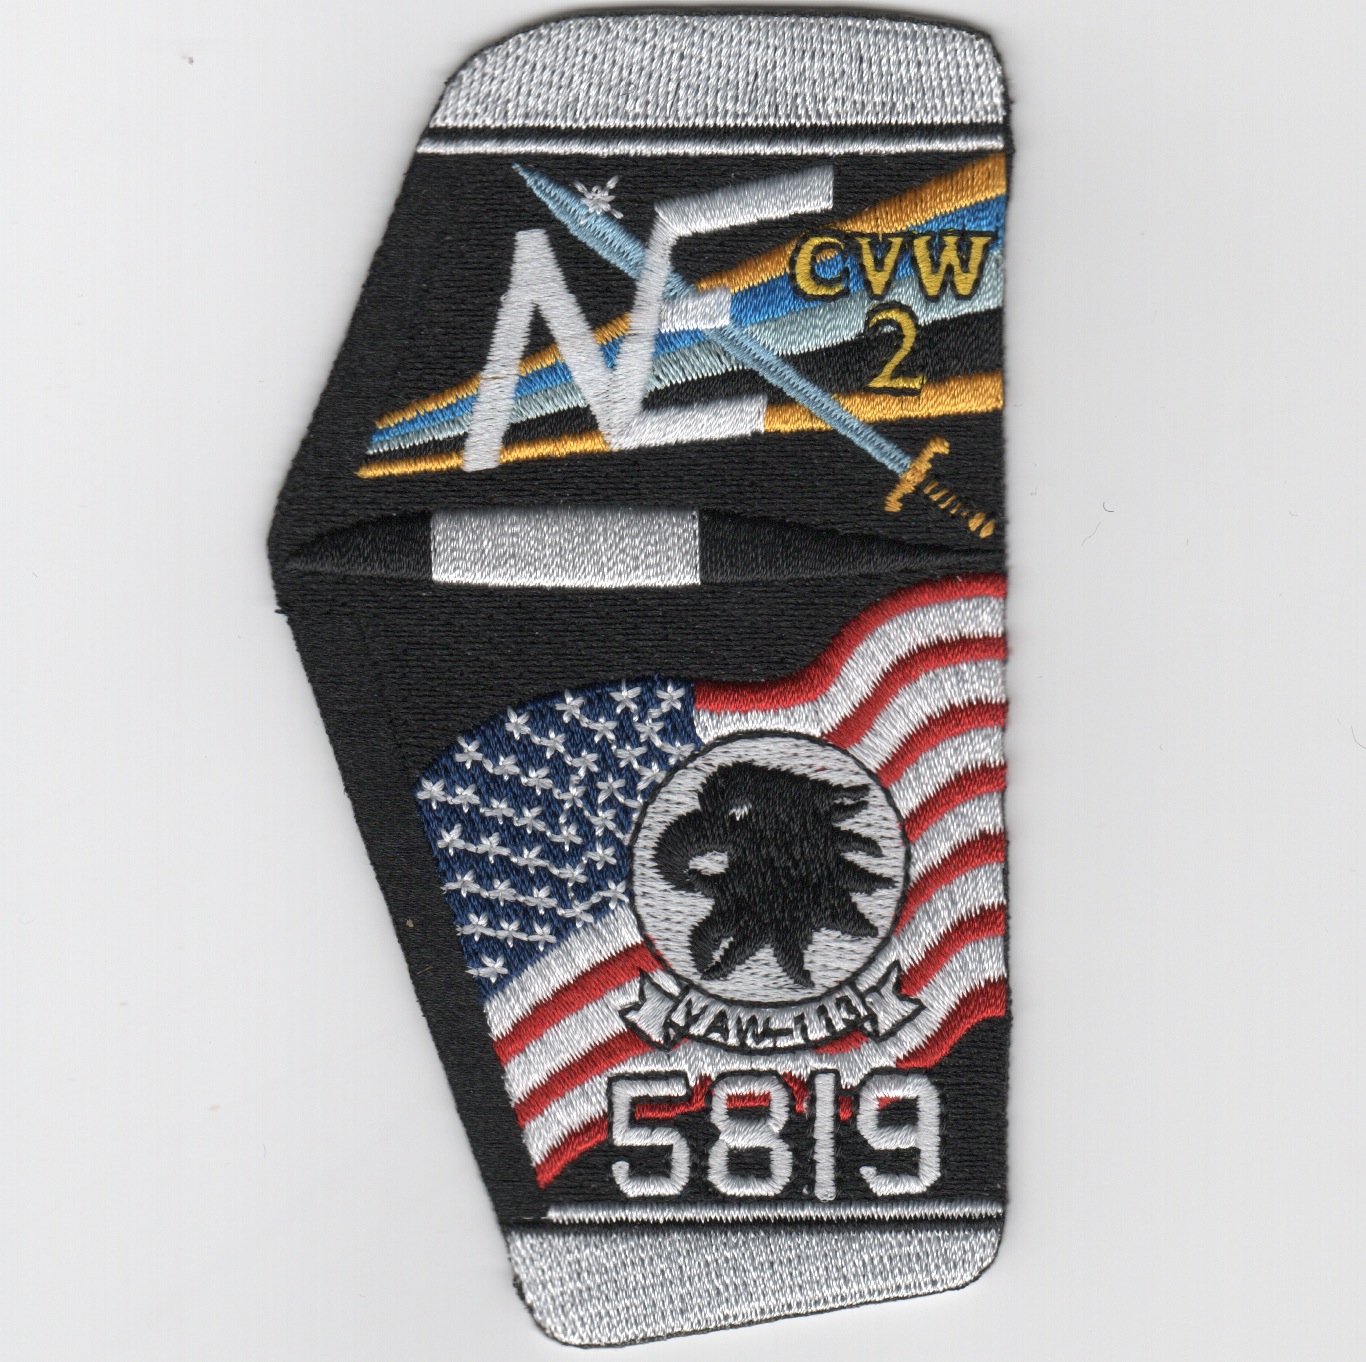 VAW-113 'E-2C Tail' Commemorative Patch (Velcro)